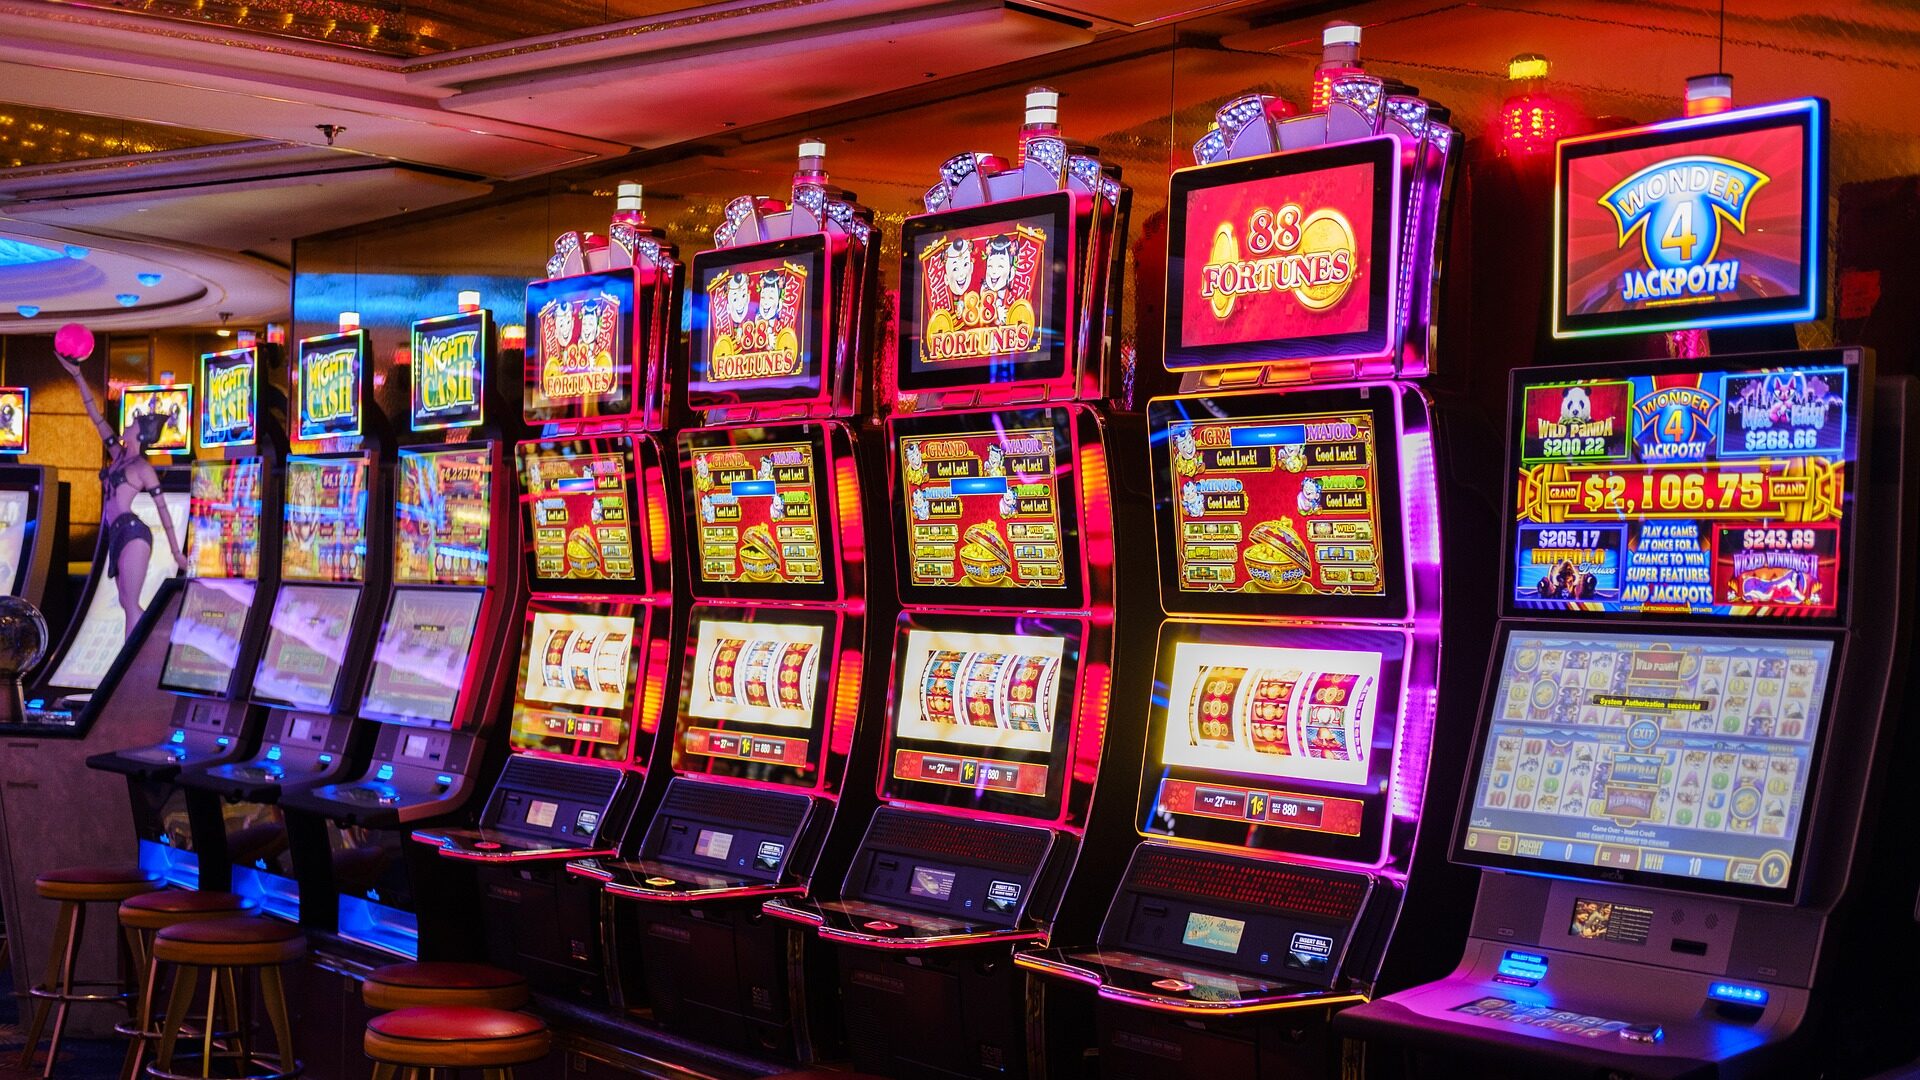 Billion Dollar Bet May Make Mgm The Leader In Online Gambling